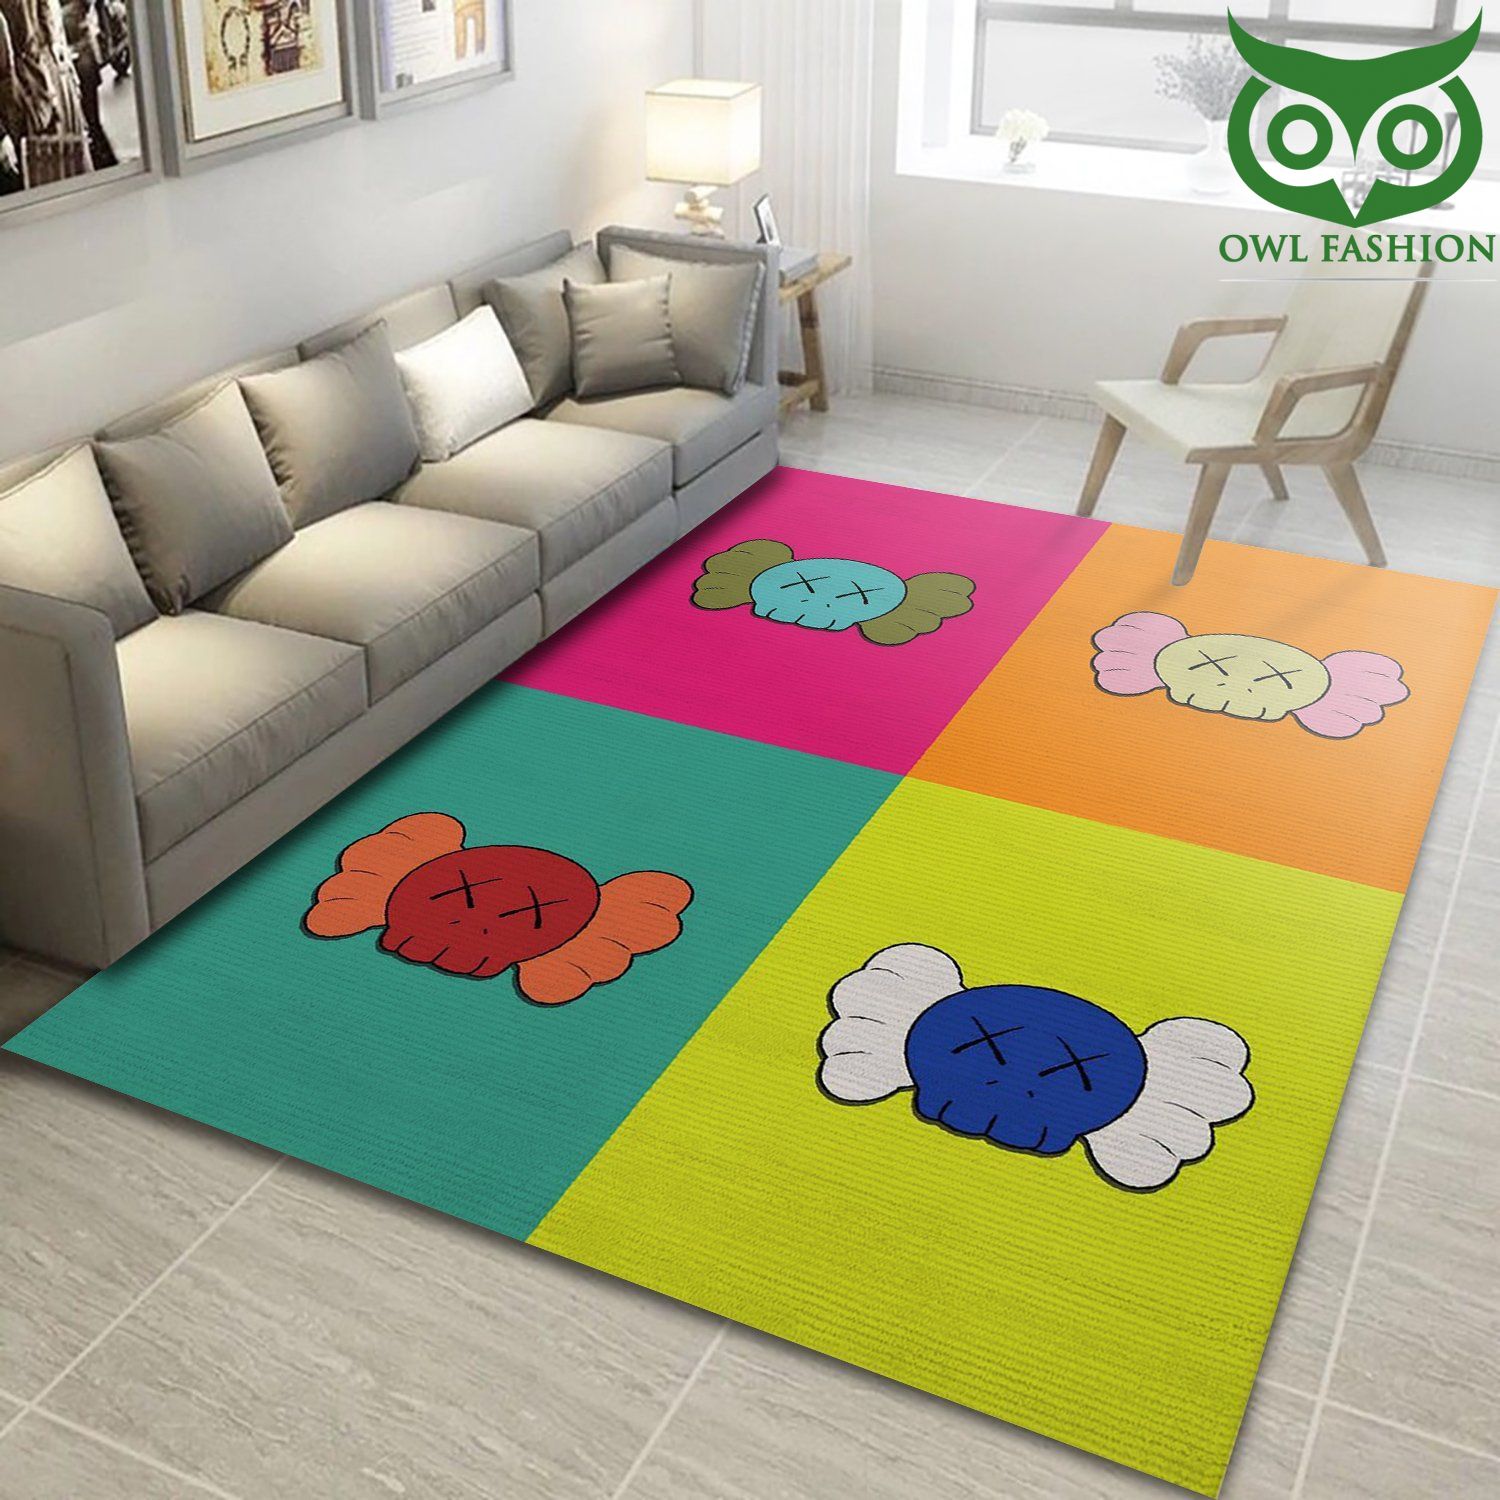 Kaws Area carpet rug Home and floor Decor